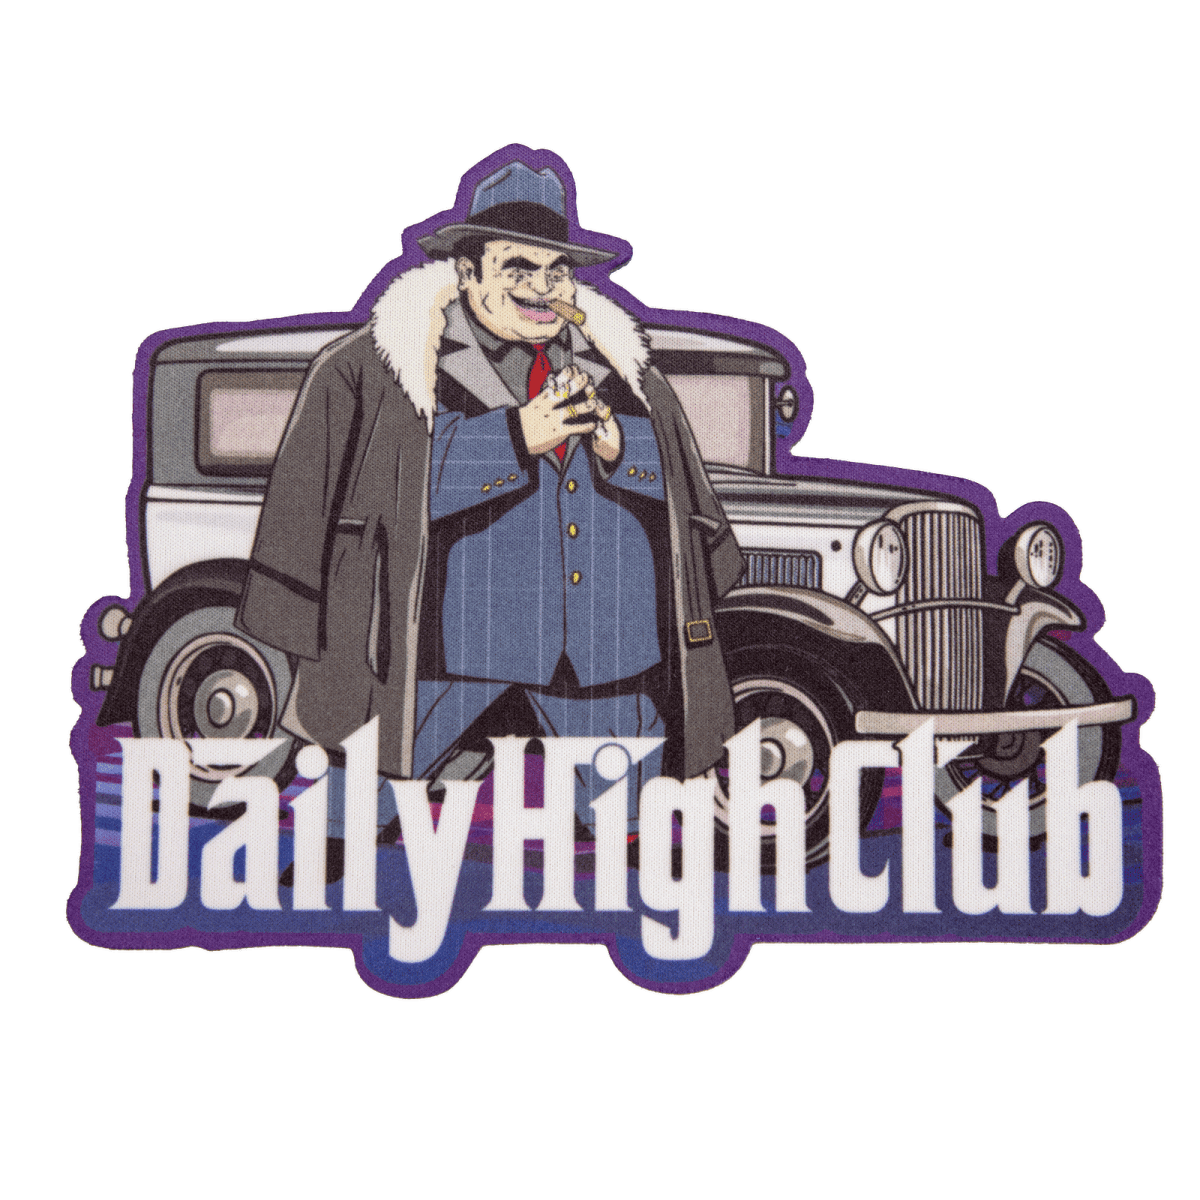 QUARTZ DAB STRAW – Daily High Club